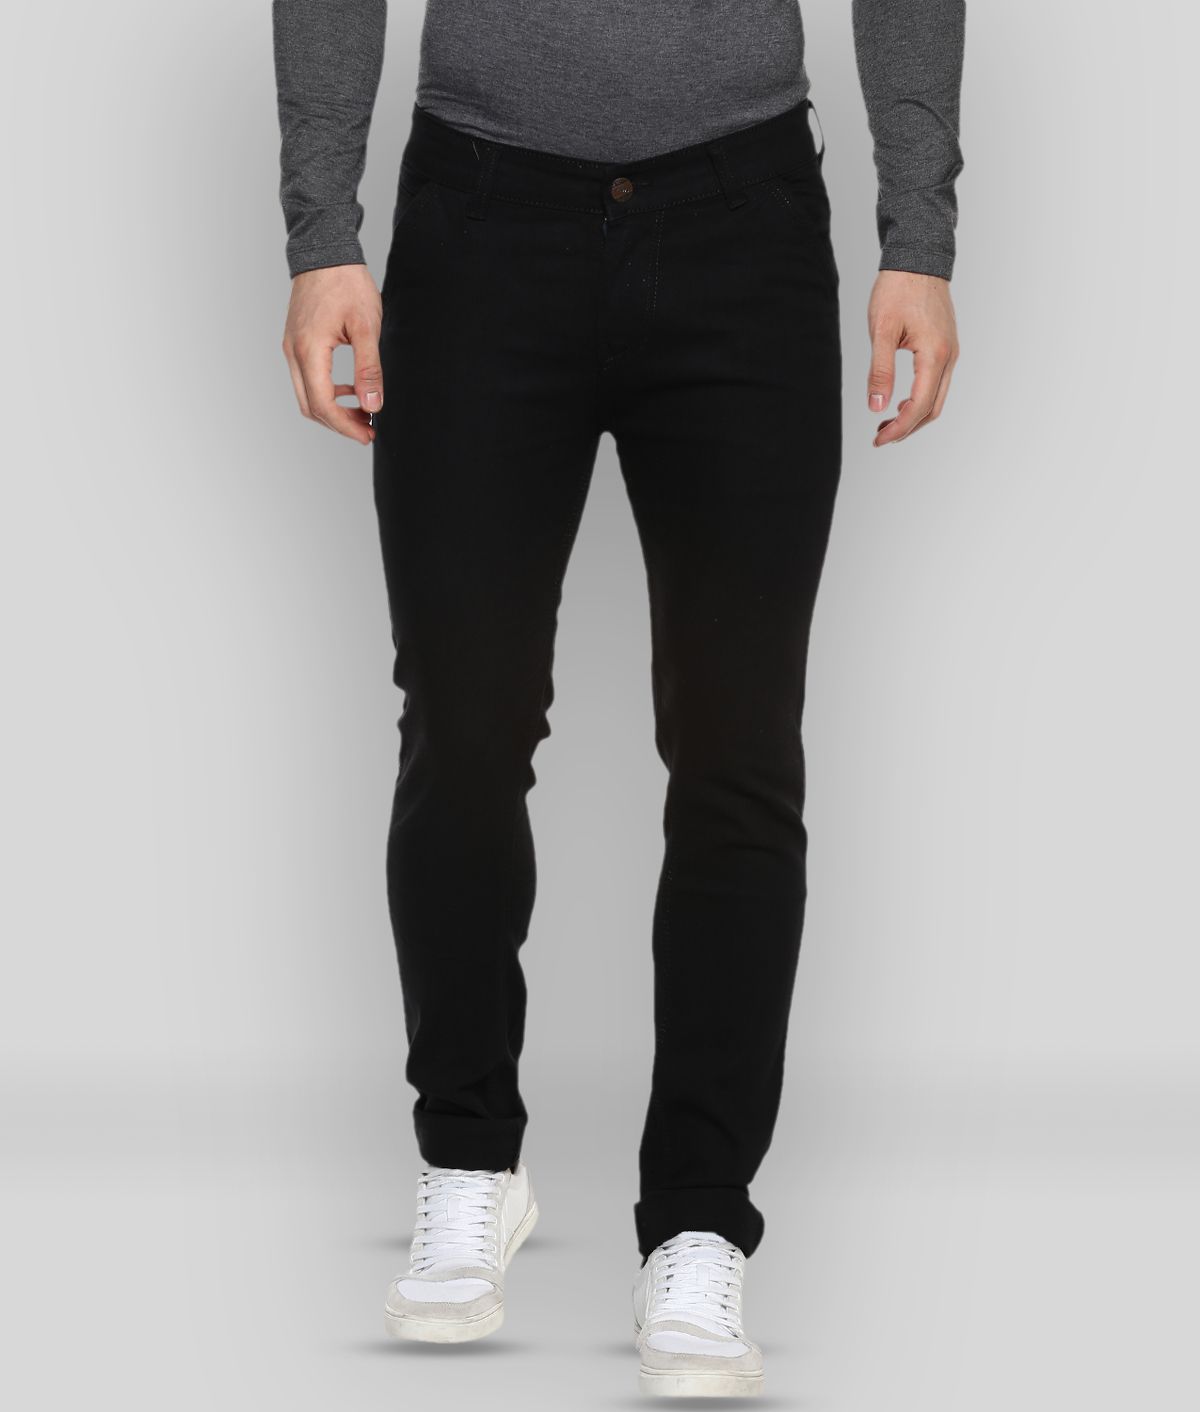 Urbano Fashion - Black Cotton Blend Slim Fit Men's Jeans ( Pack of 1 )